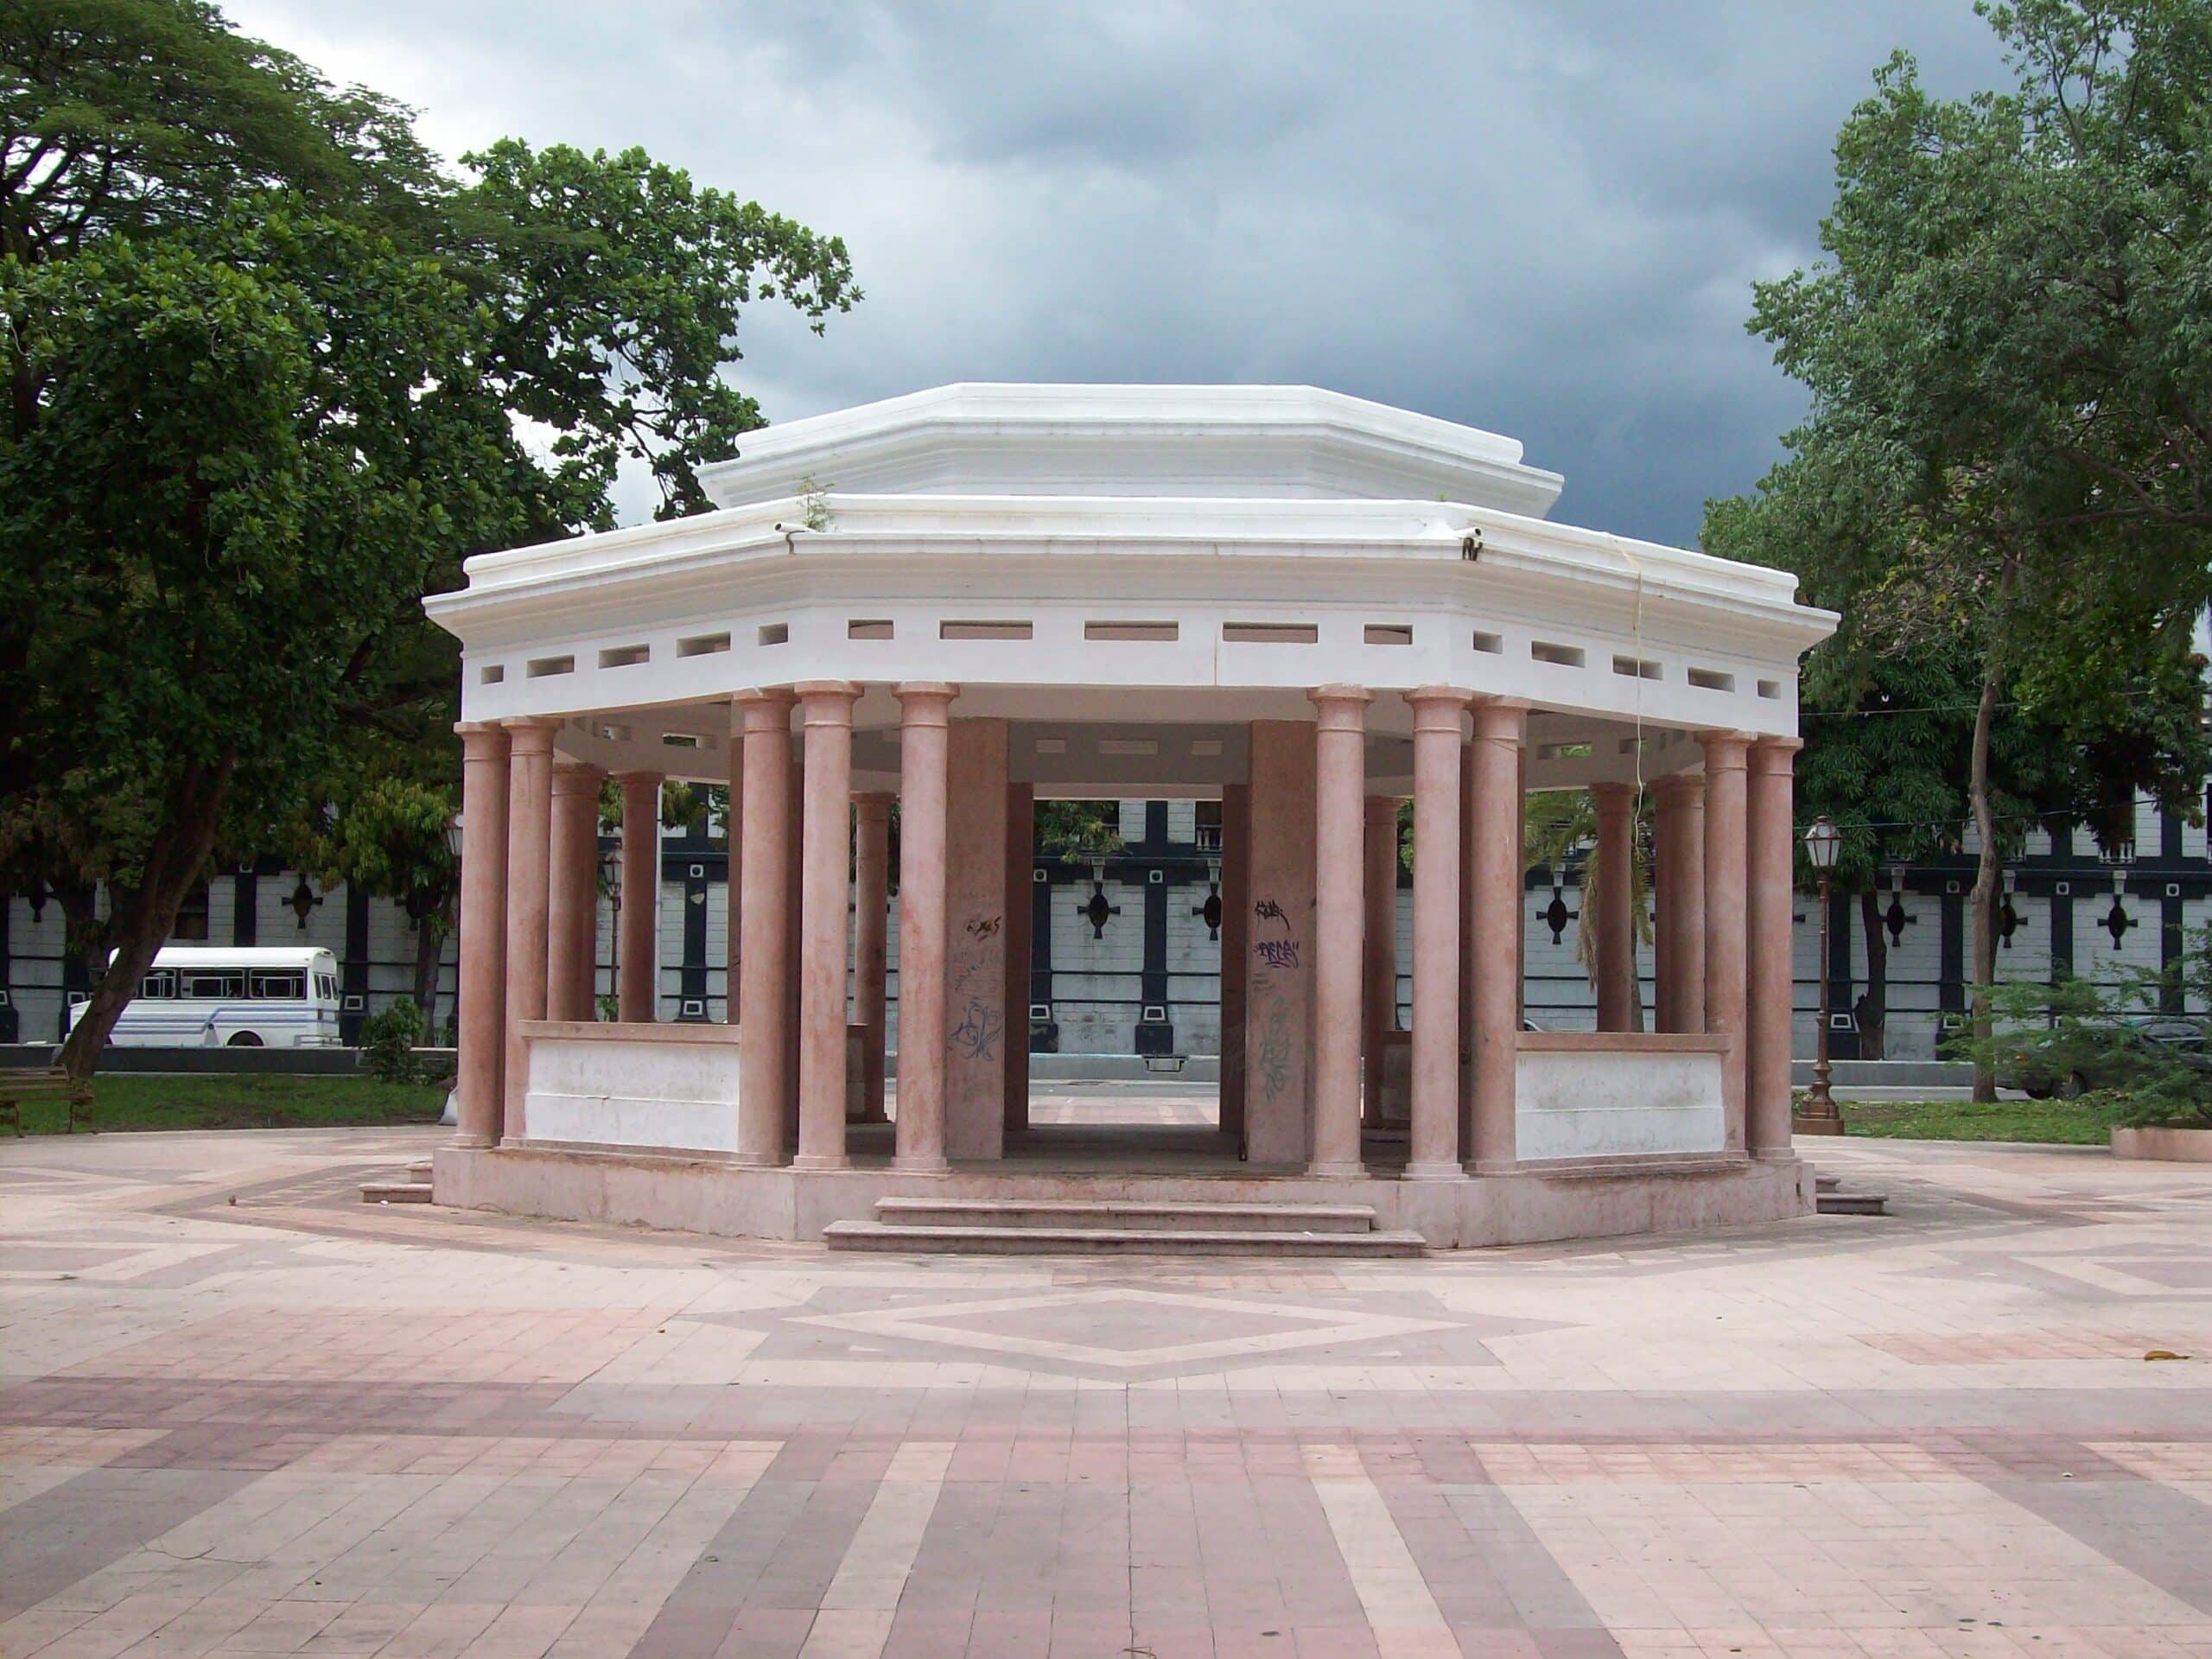 Plaza Bolívar de Maracay en enero - Plaza Bolívar de Maracay en enero